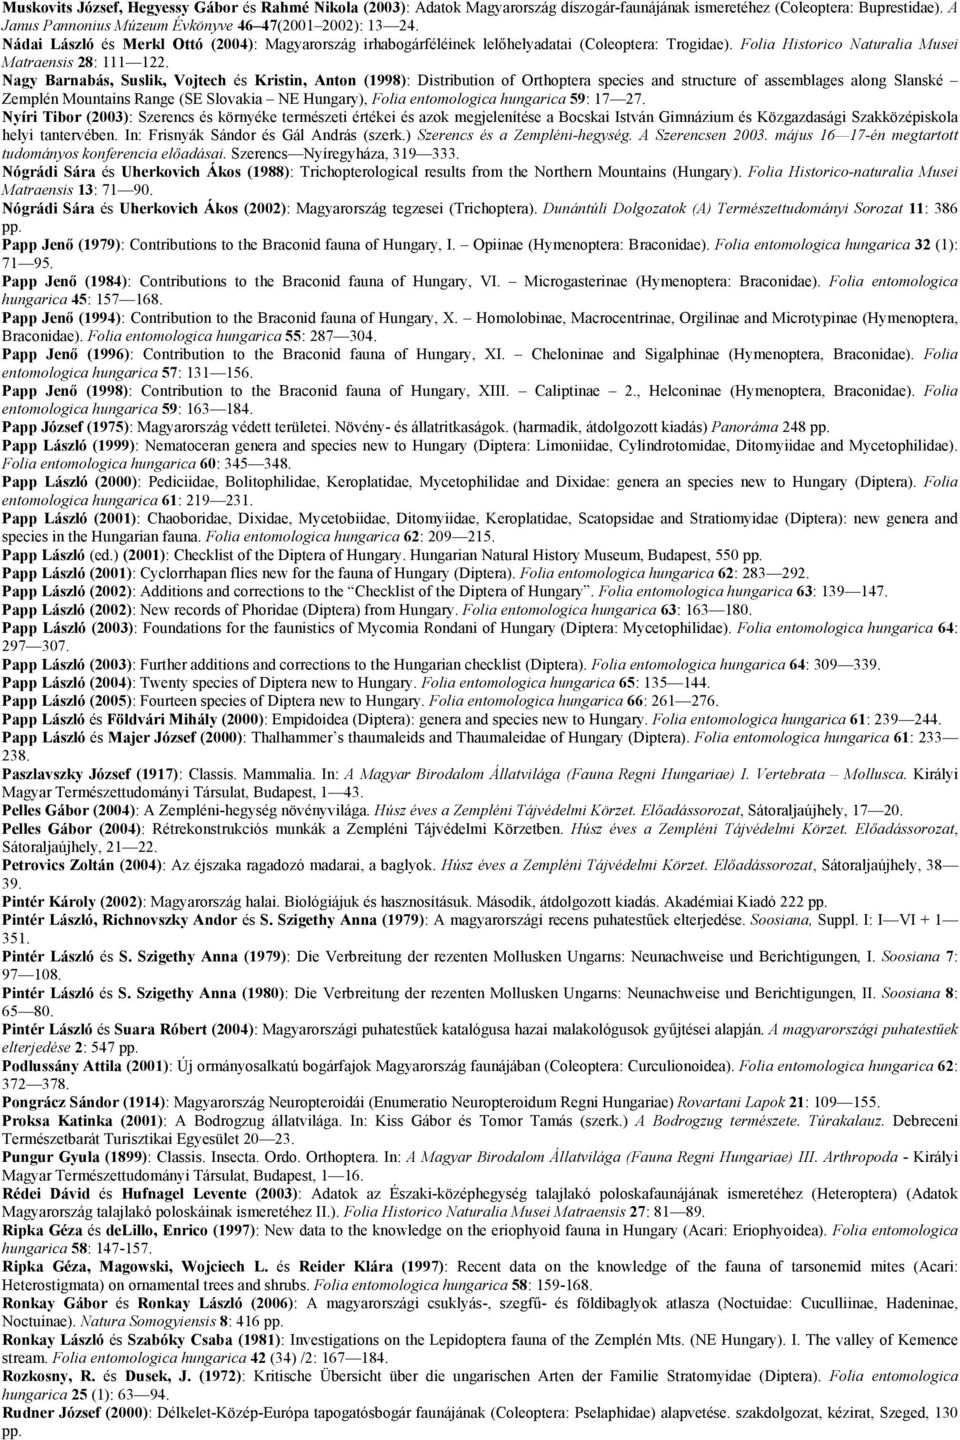 Nagy Barnabás, Suslik, Vojtech és Kristin, Anton (1998): Distribution of Orthoptera species and structure of assemblages along Slanské Zemplén Mountains Range (SE Slovakia NE Hungary), Folia